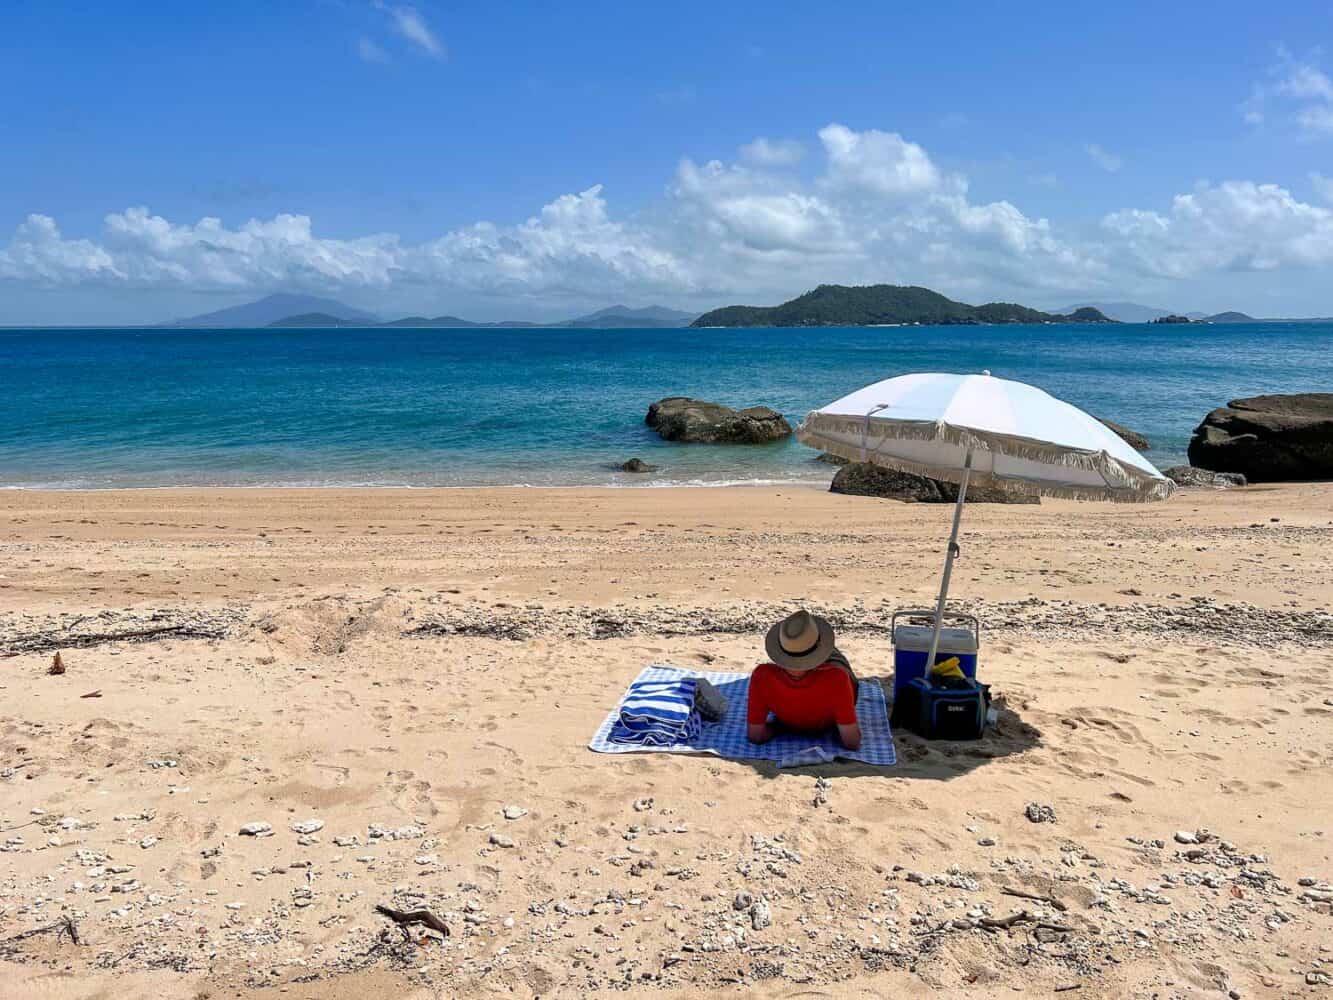 Simon relaxing on Wheeler Island, Bedarra Island Resort, Queensland, Australia